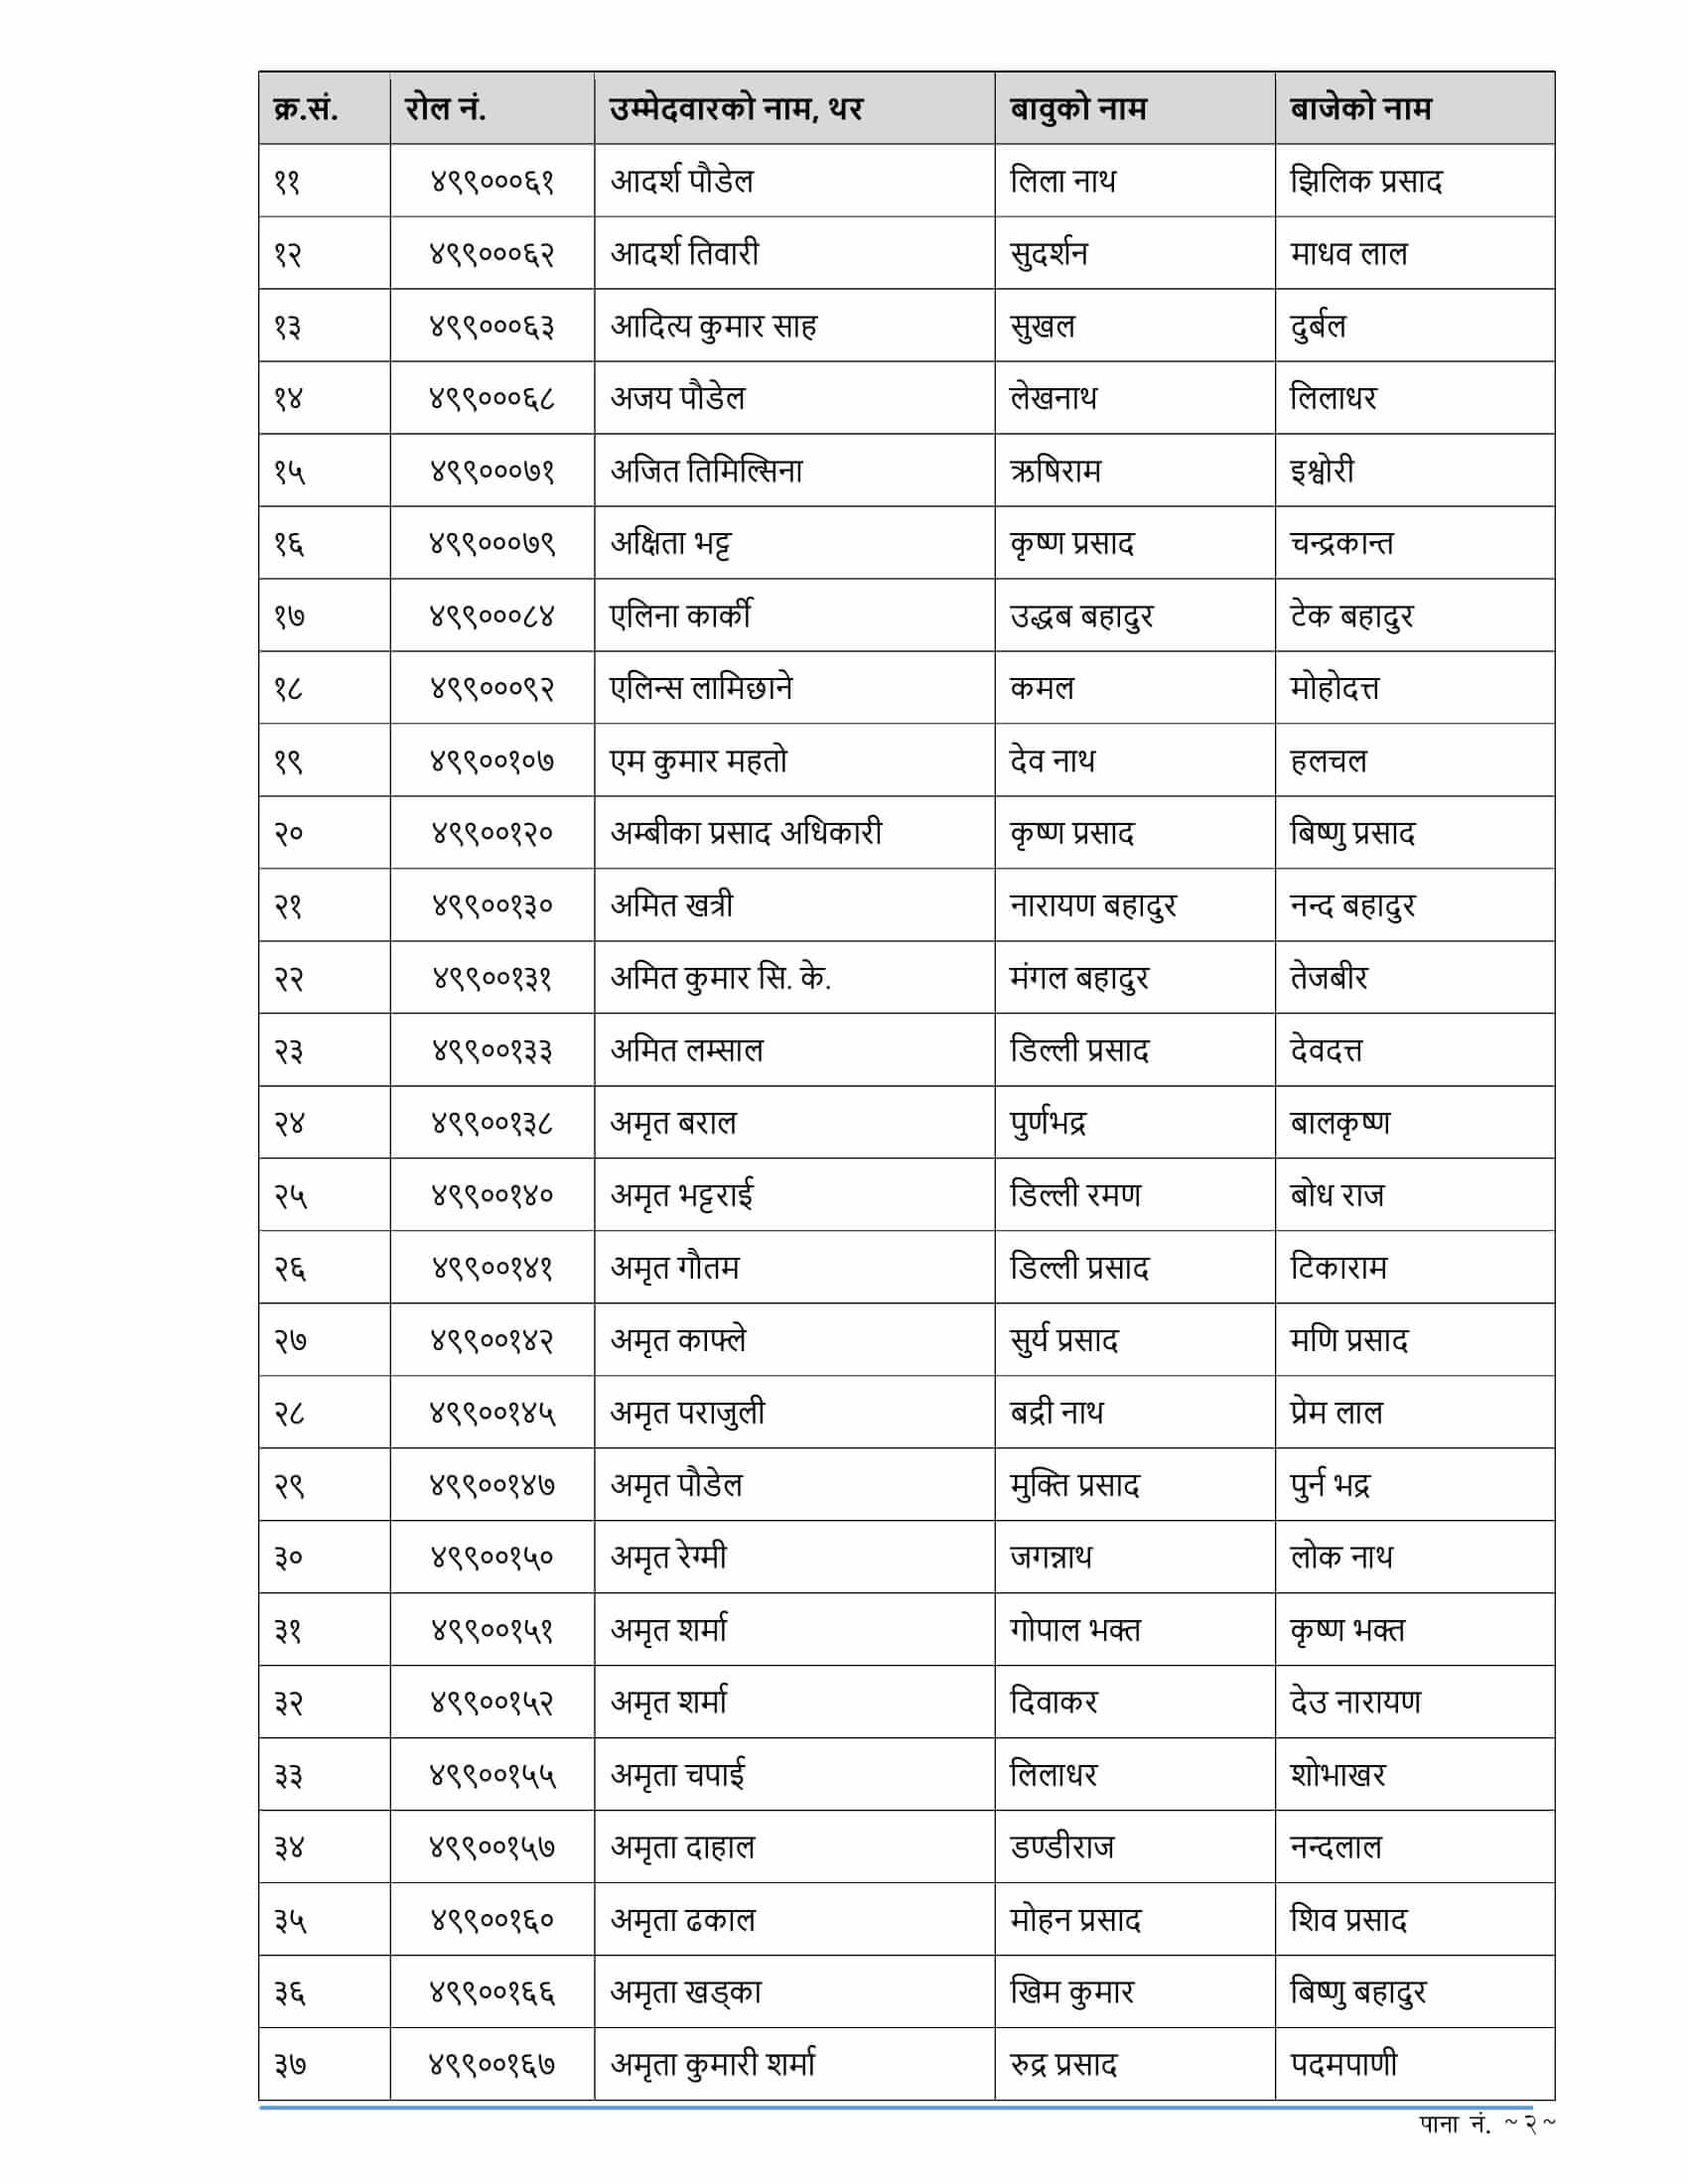 Gandaki Pradesh Rastriya Banijya Bank Written Exam Result of 4th Level Assistant